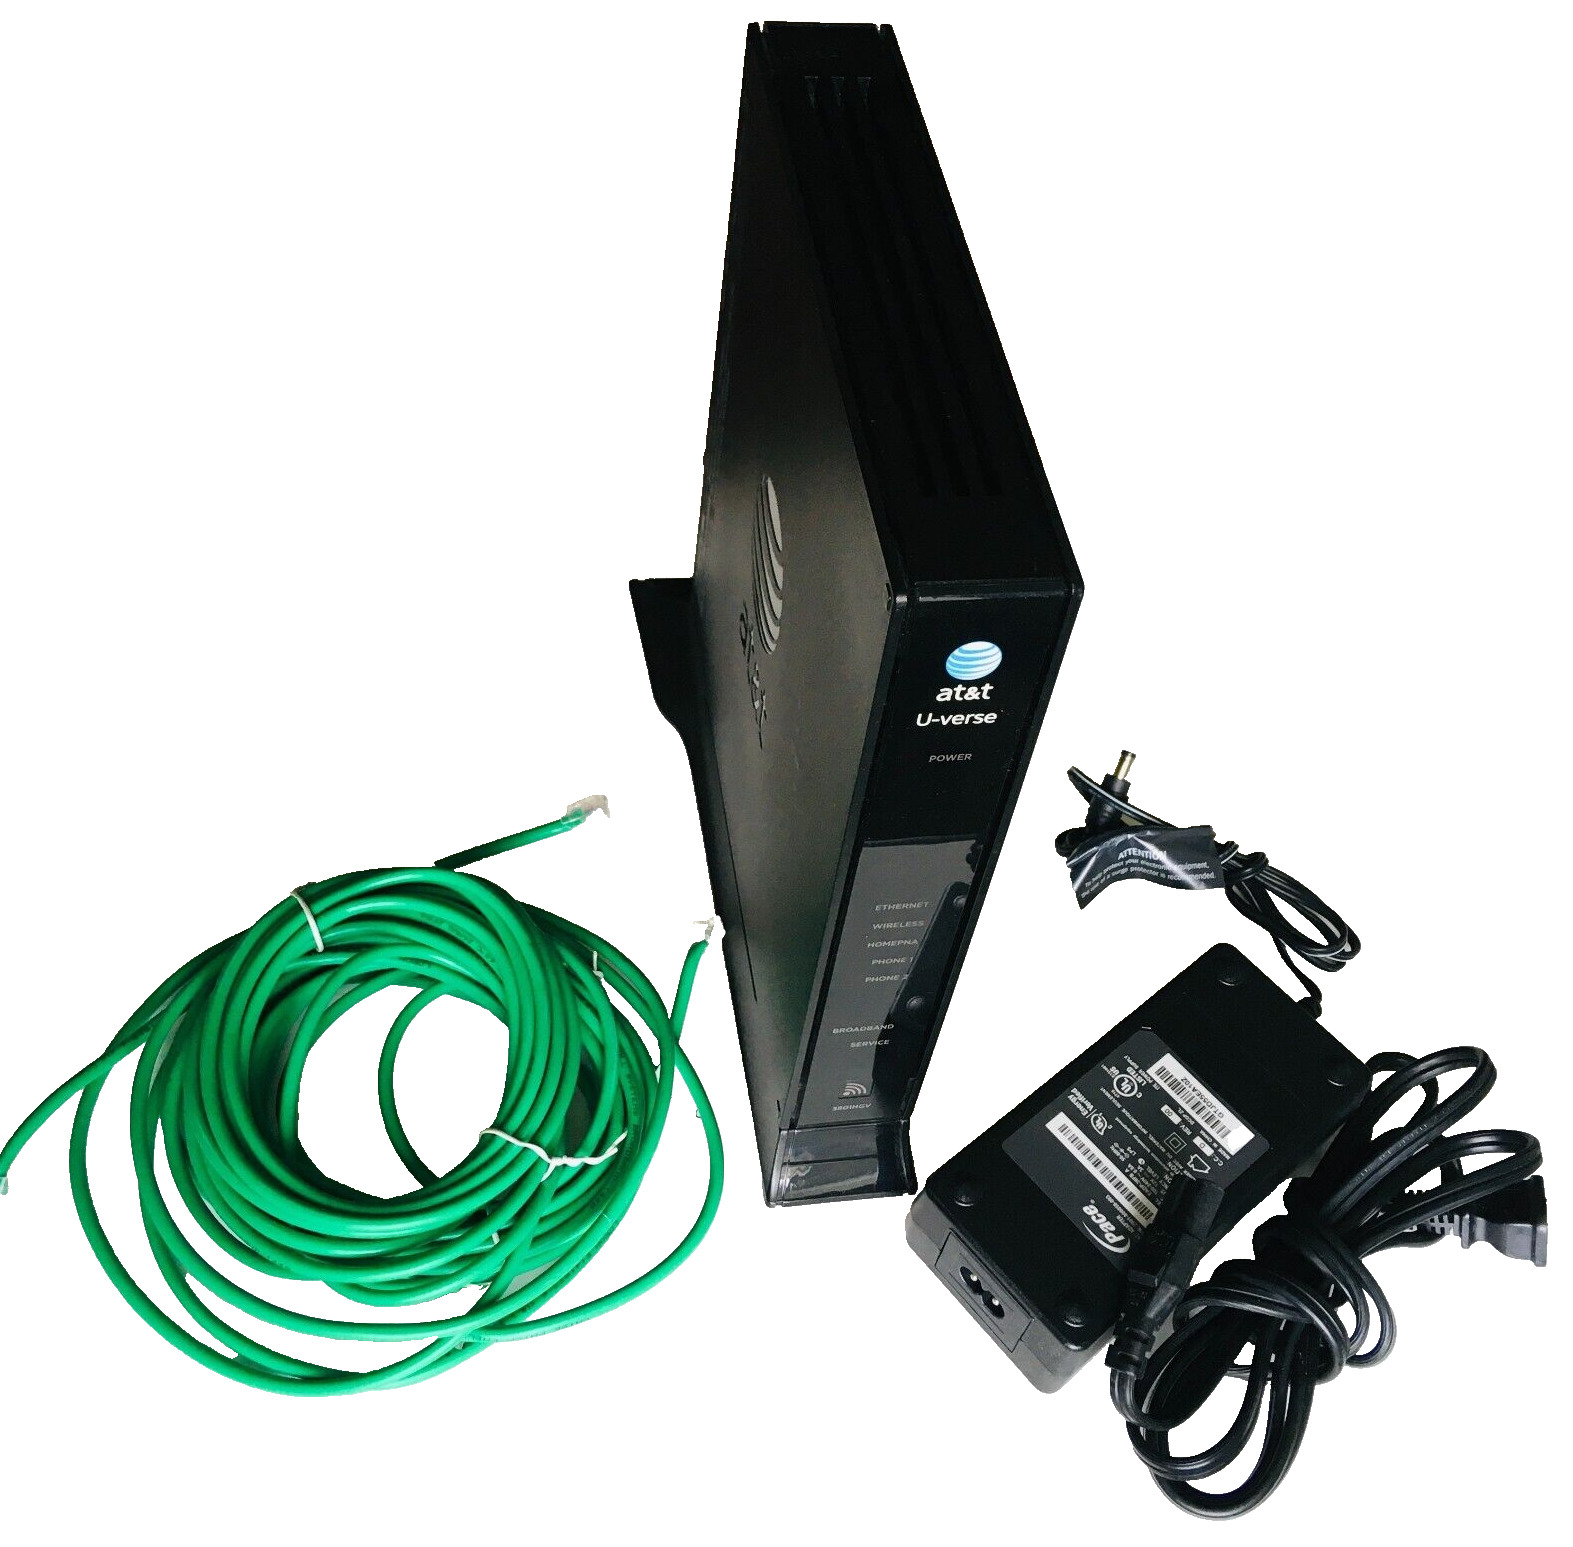 AT&T U-verse 2Wire 3801HGV Gateway Wi-Fi Modem Router Broadband Power Adapter